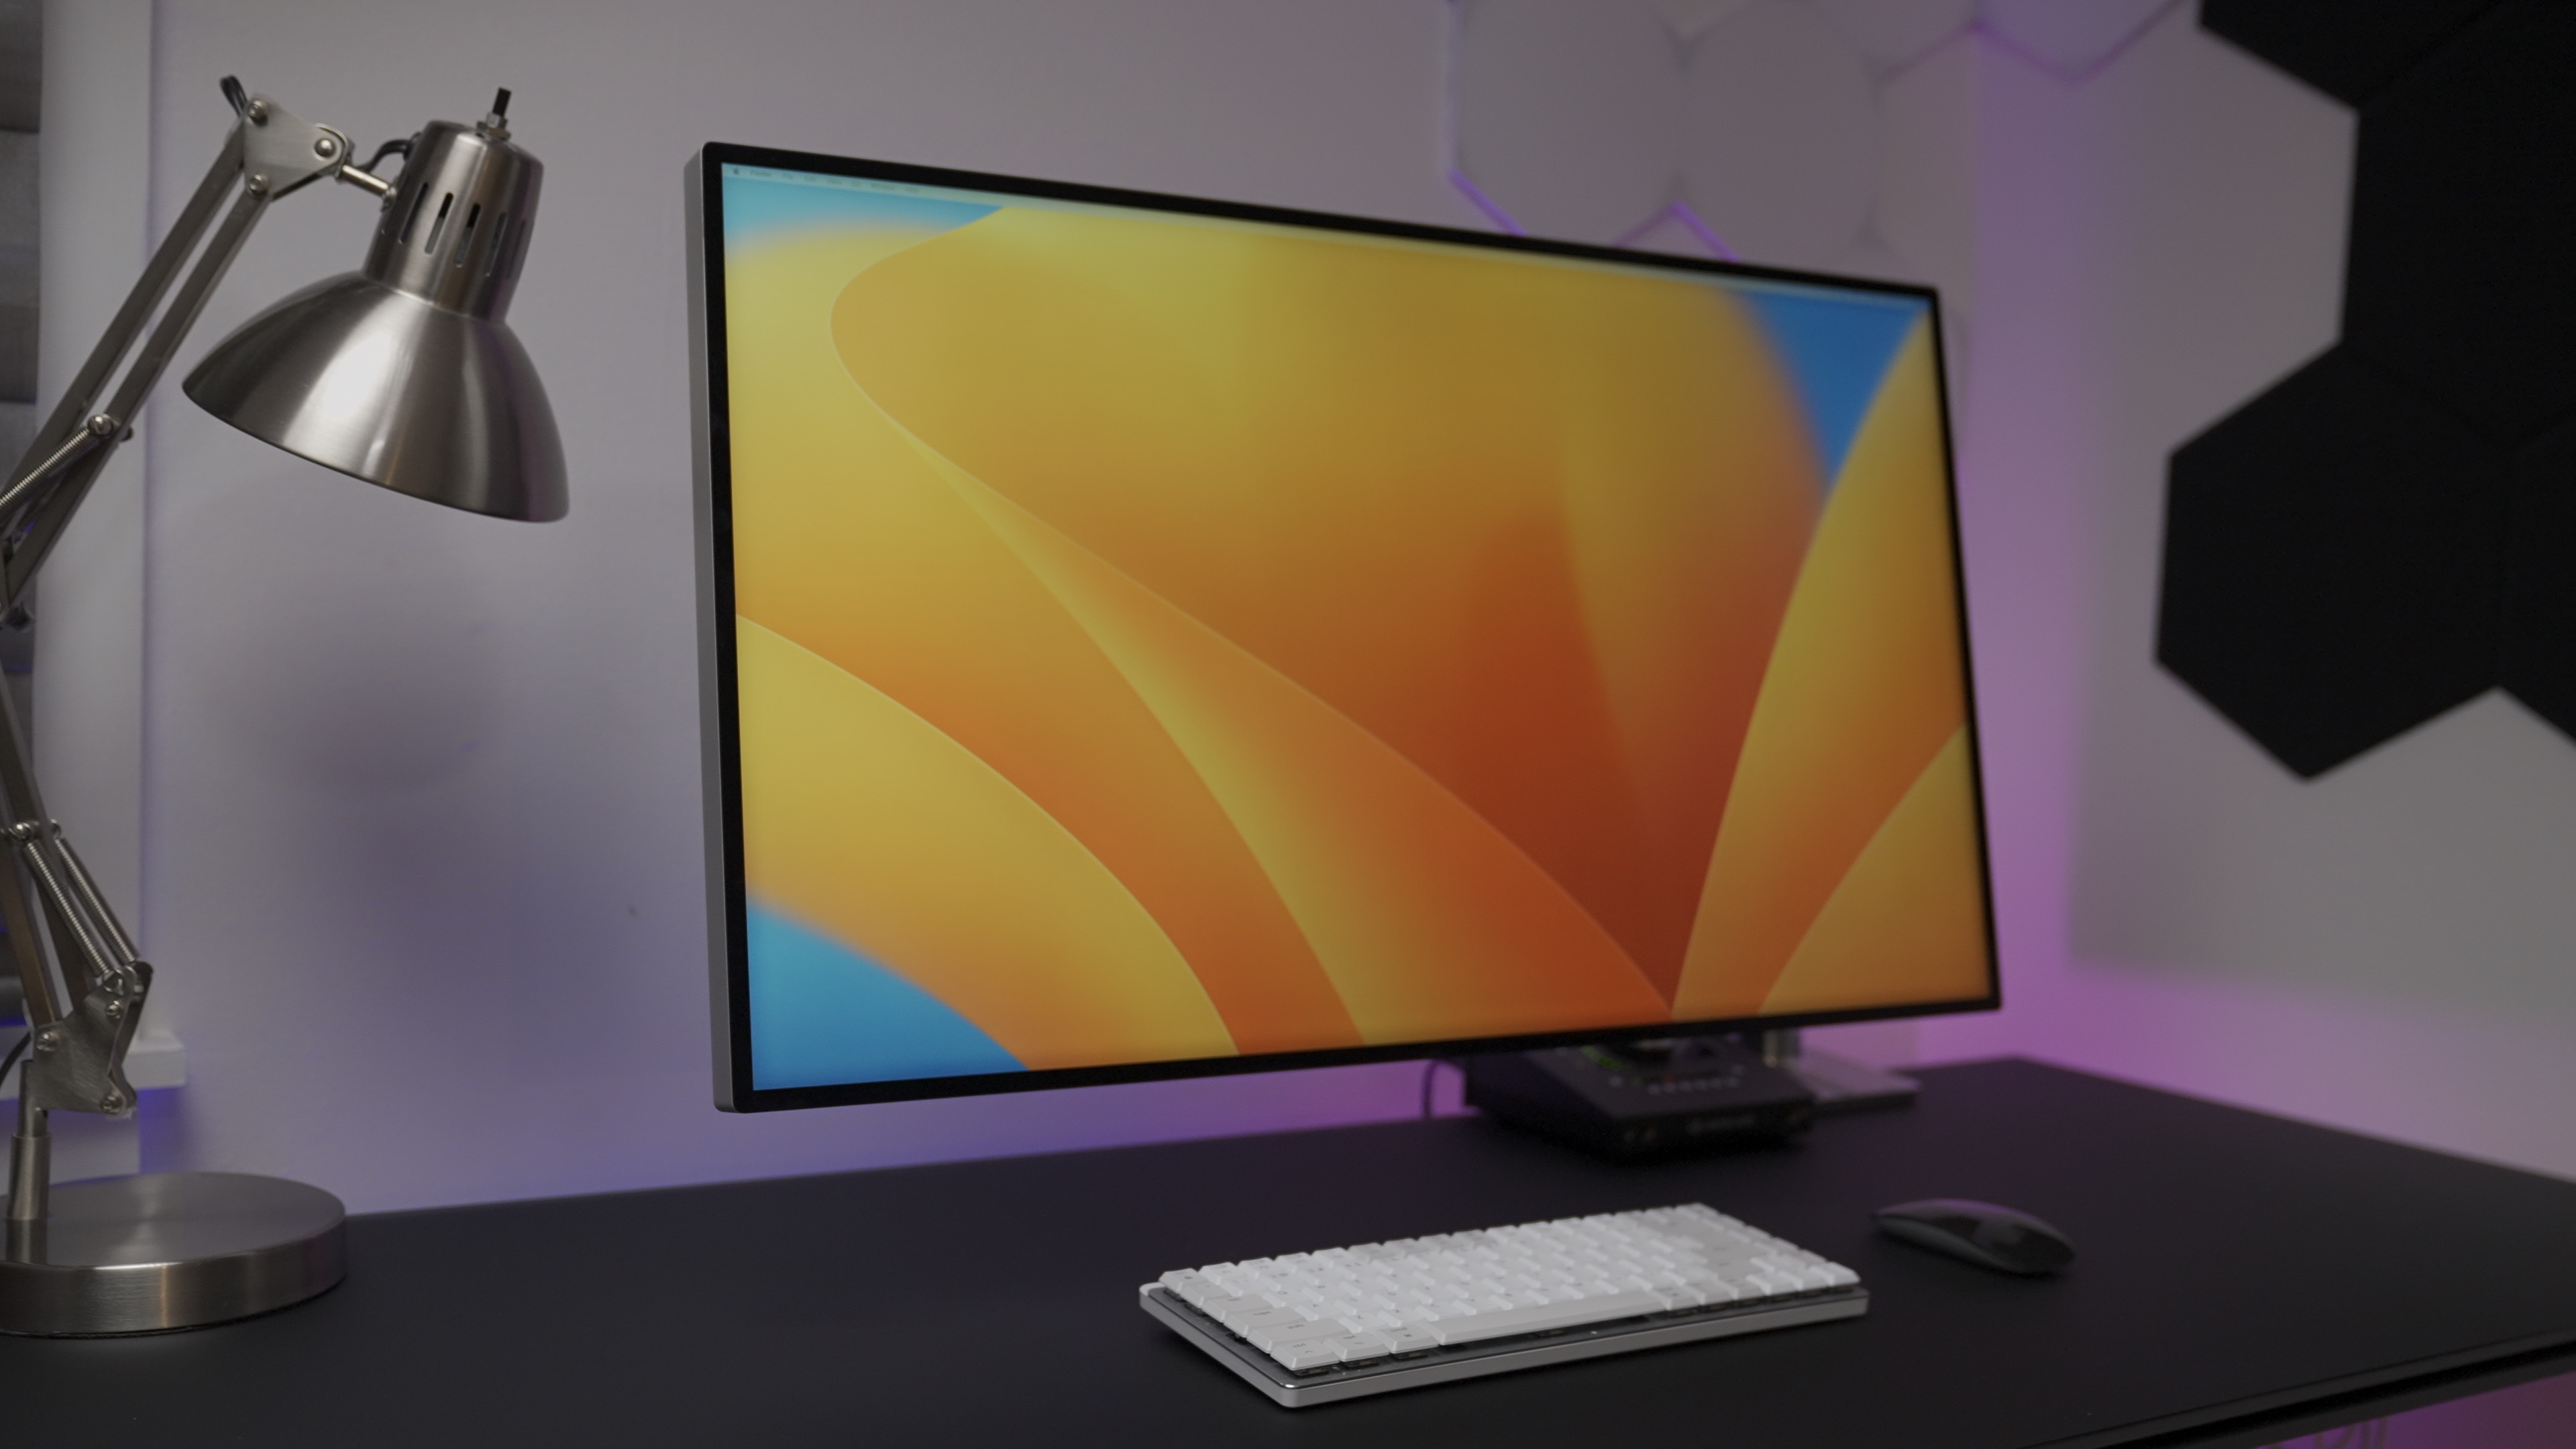 Mac mini clean desktop setup